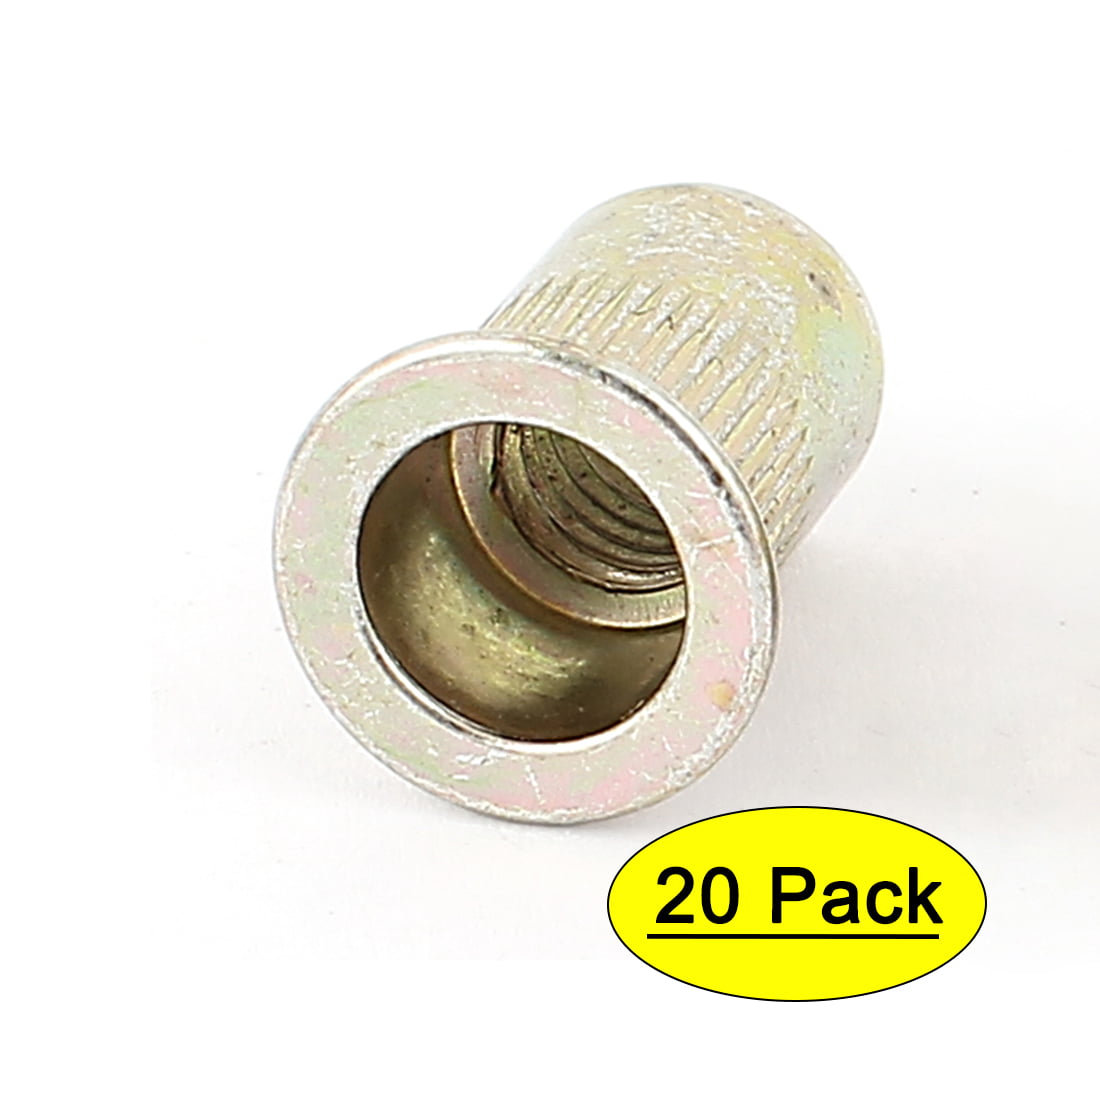 40Pcs 1/4”-20 Rivet Nuts Stainless Steel Threaded Insert Nut 1/4-20UNC Nutsert 